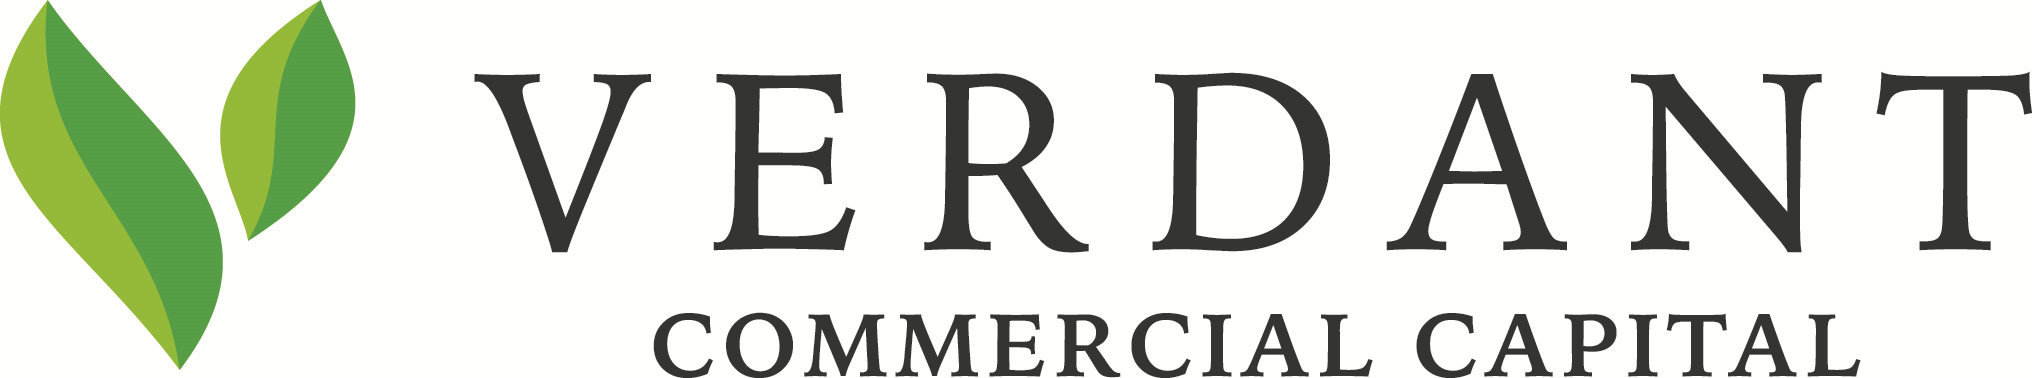 Verdant Commercial Capital logo